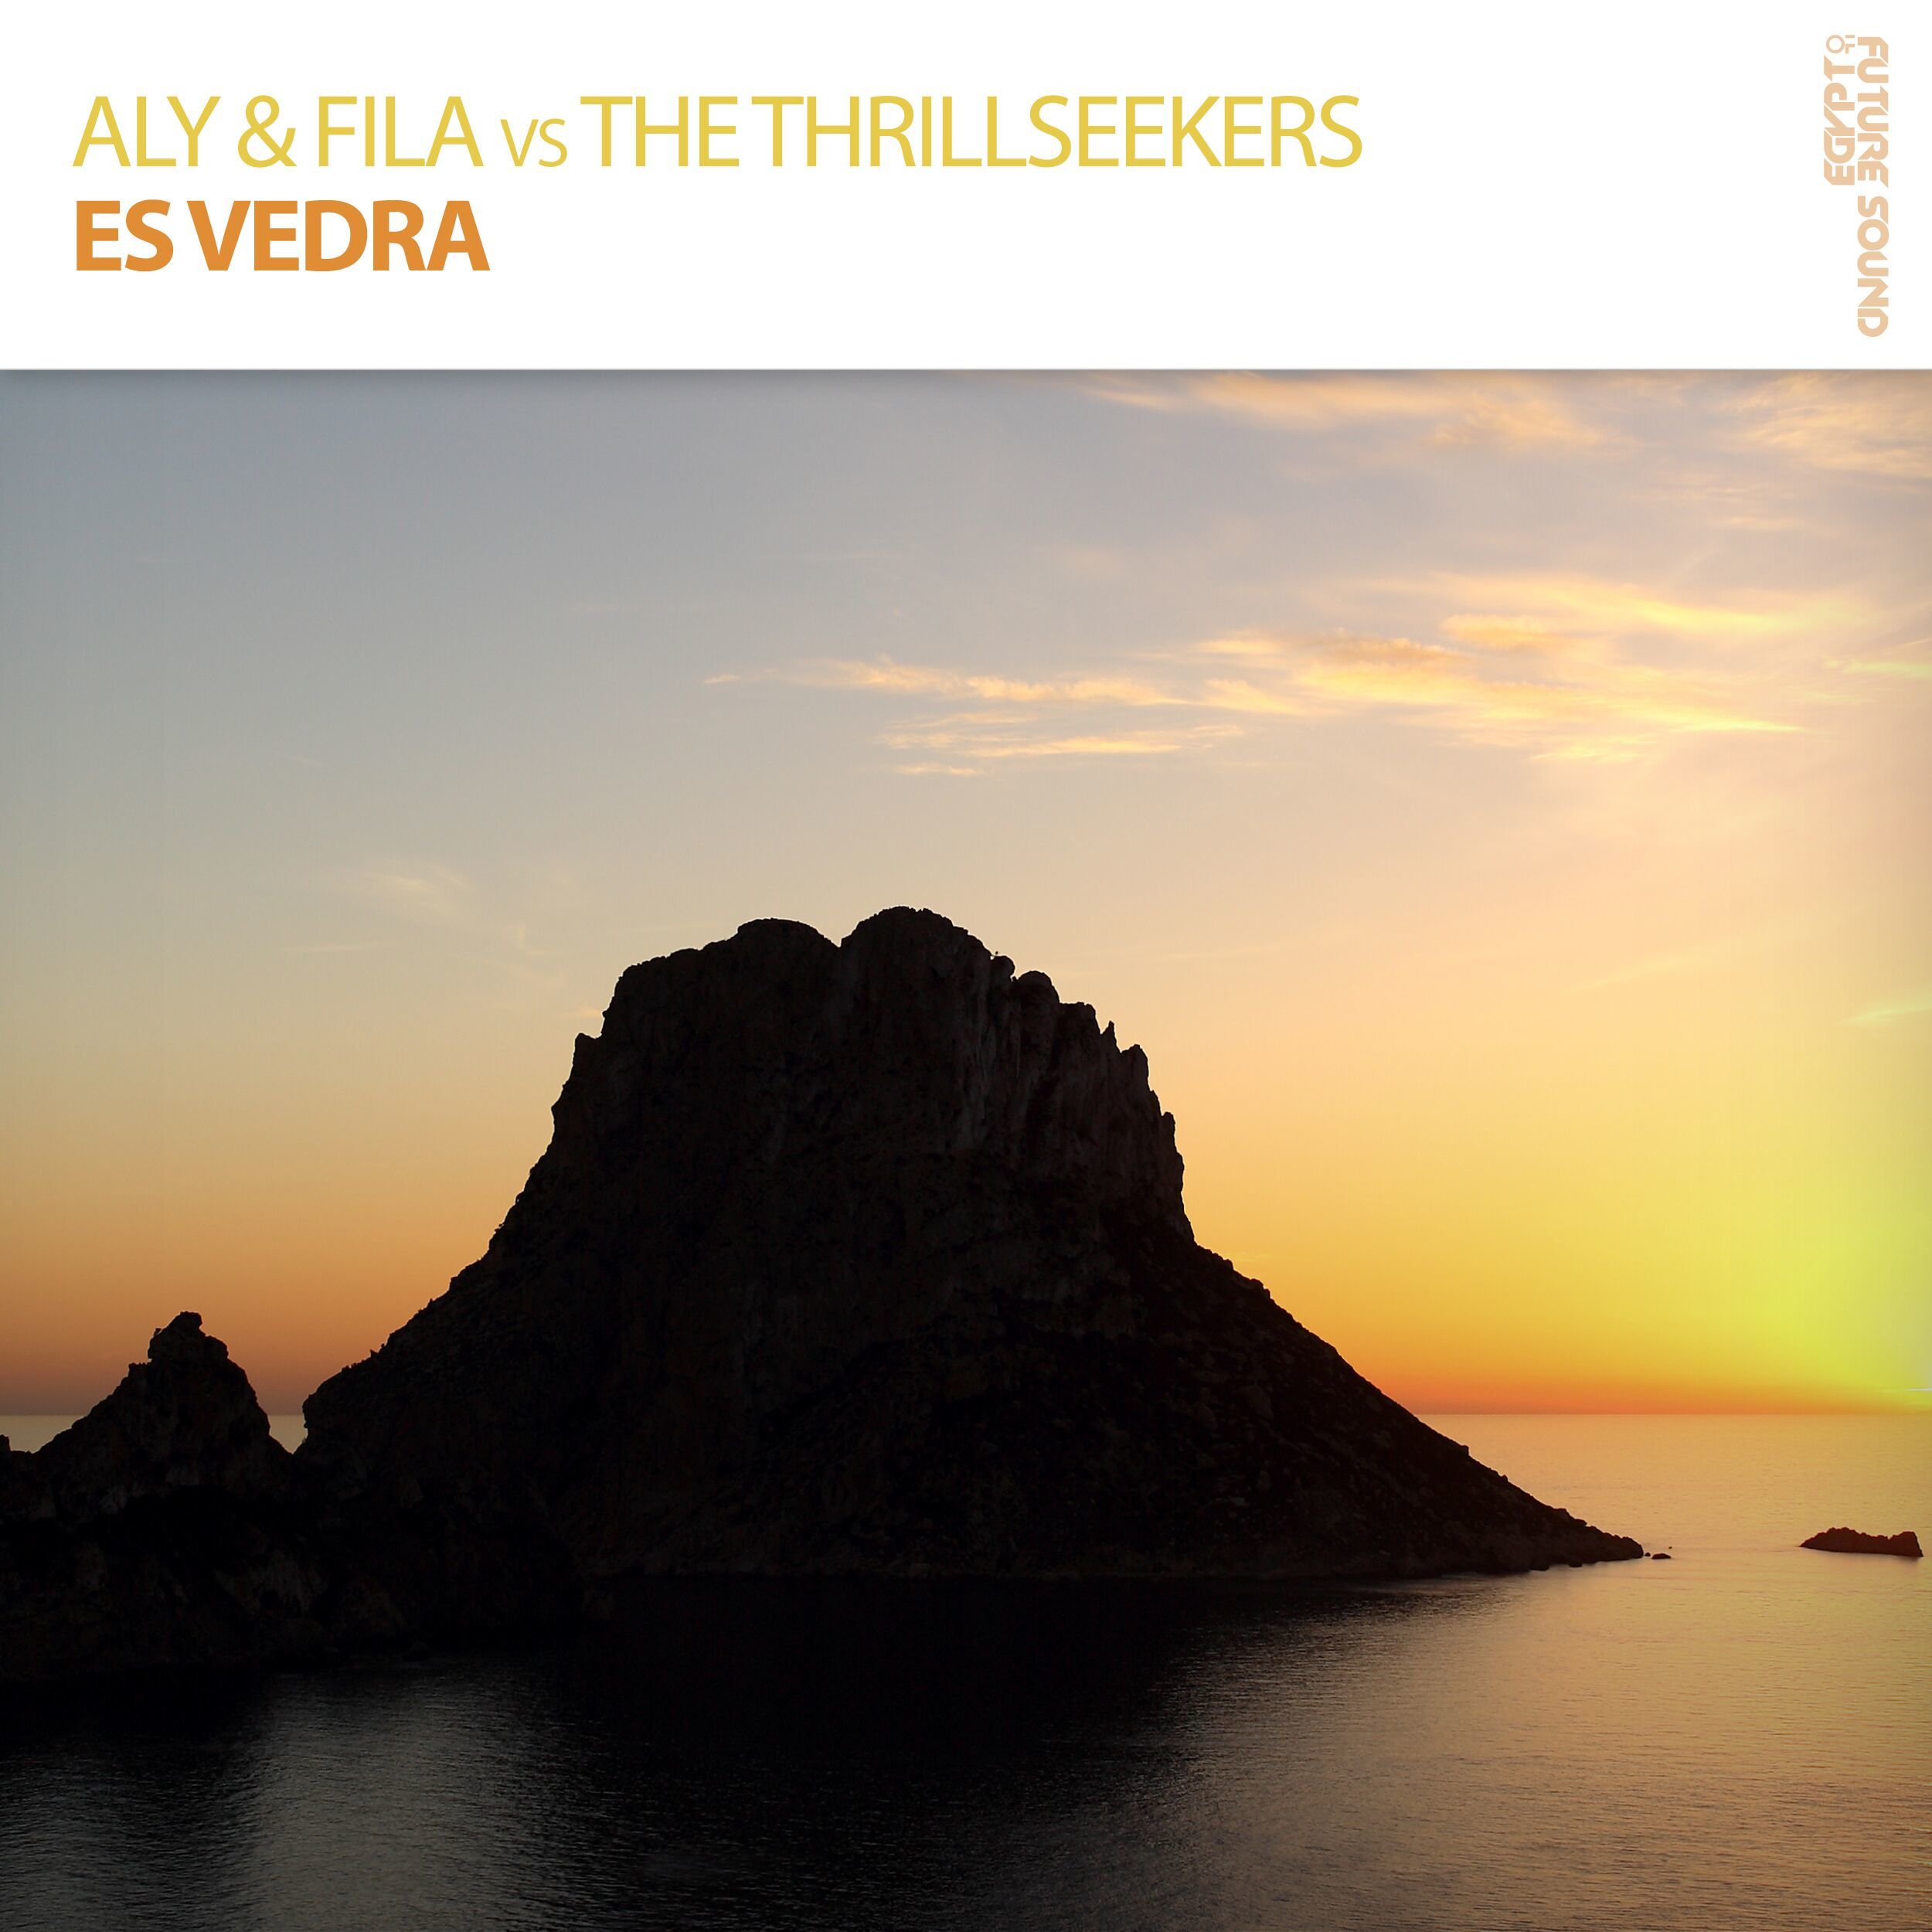 09. Aly & Fila vs. The Thrillseekers - Es Vedra (Radio Edit)